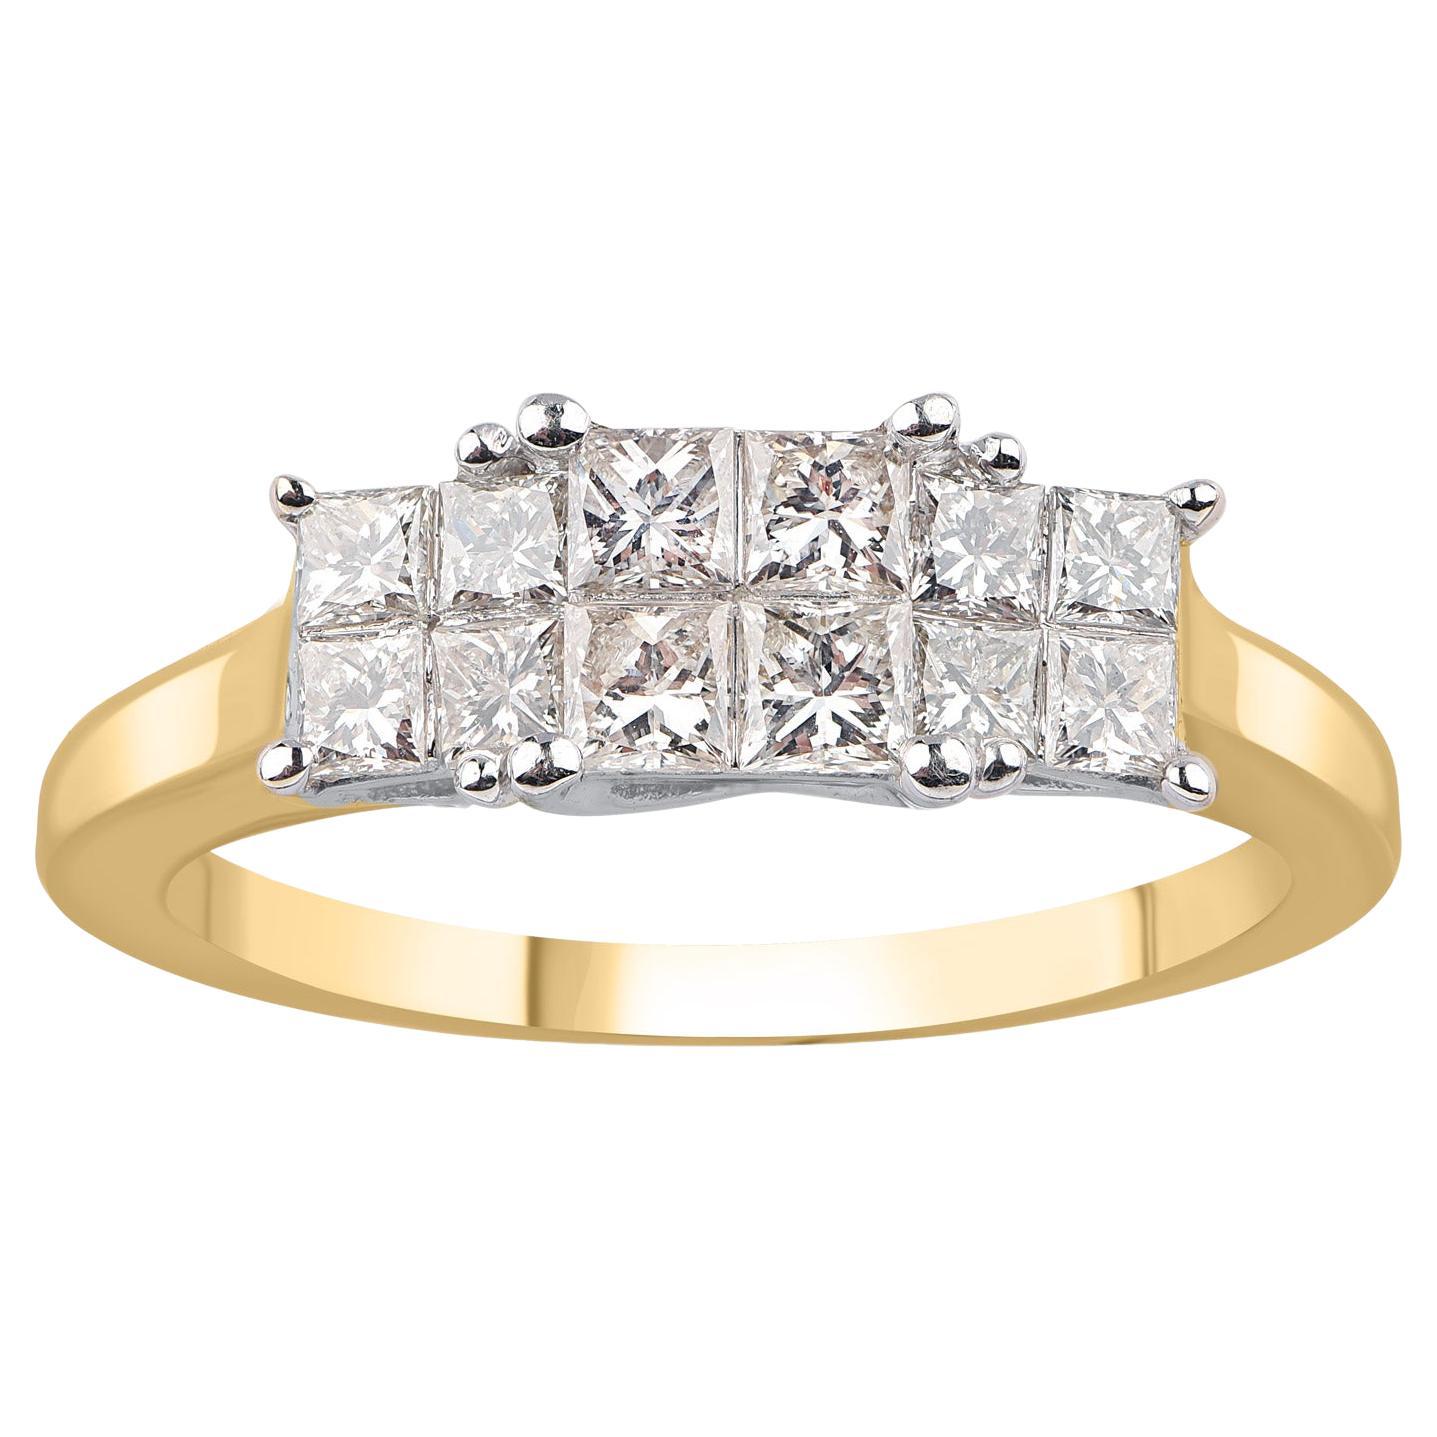 TJD 1.0 Carat Princess Cut Diamond Wedding Ring in 14 Karat Yellow Gold For Sale